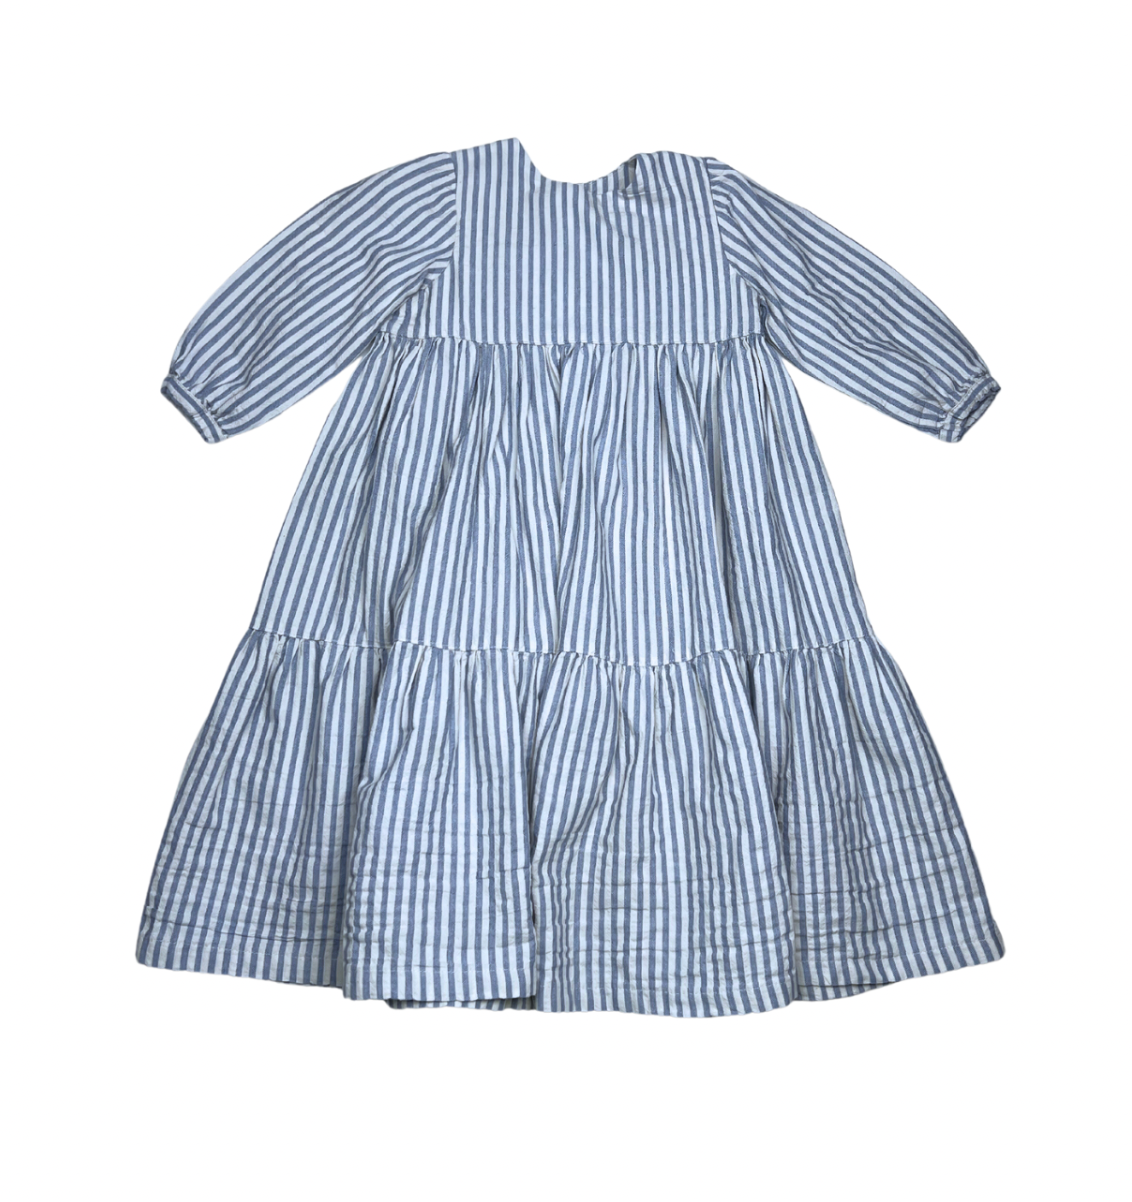 MARIA MINORCA - Robe à rayures bleues  - 4 ans